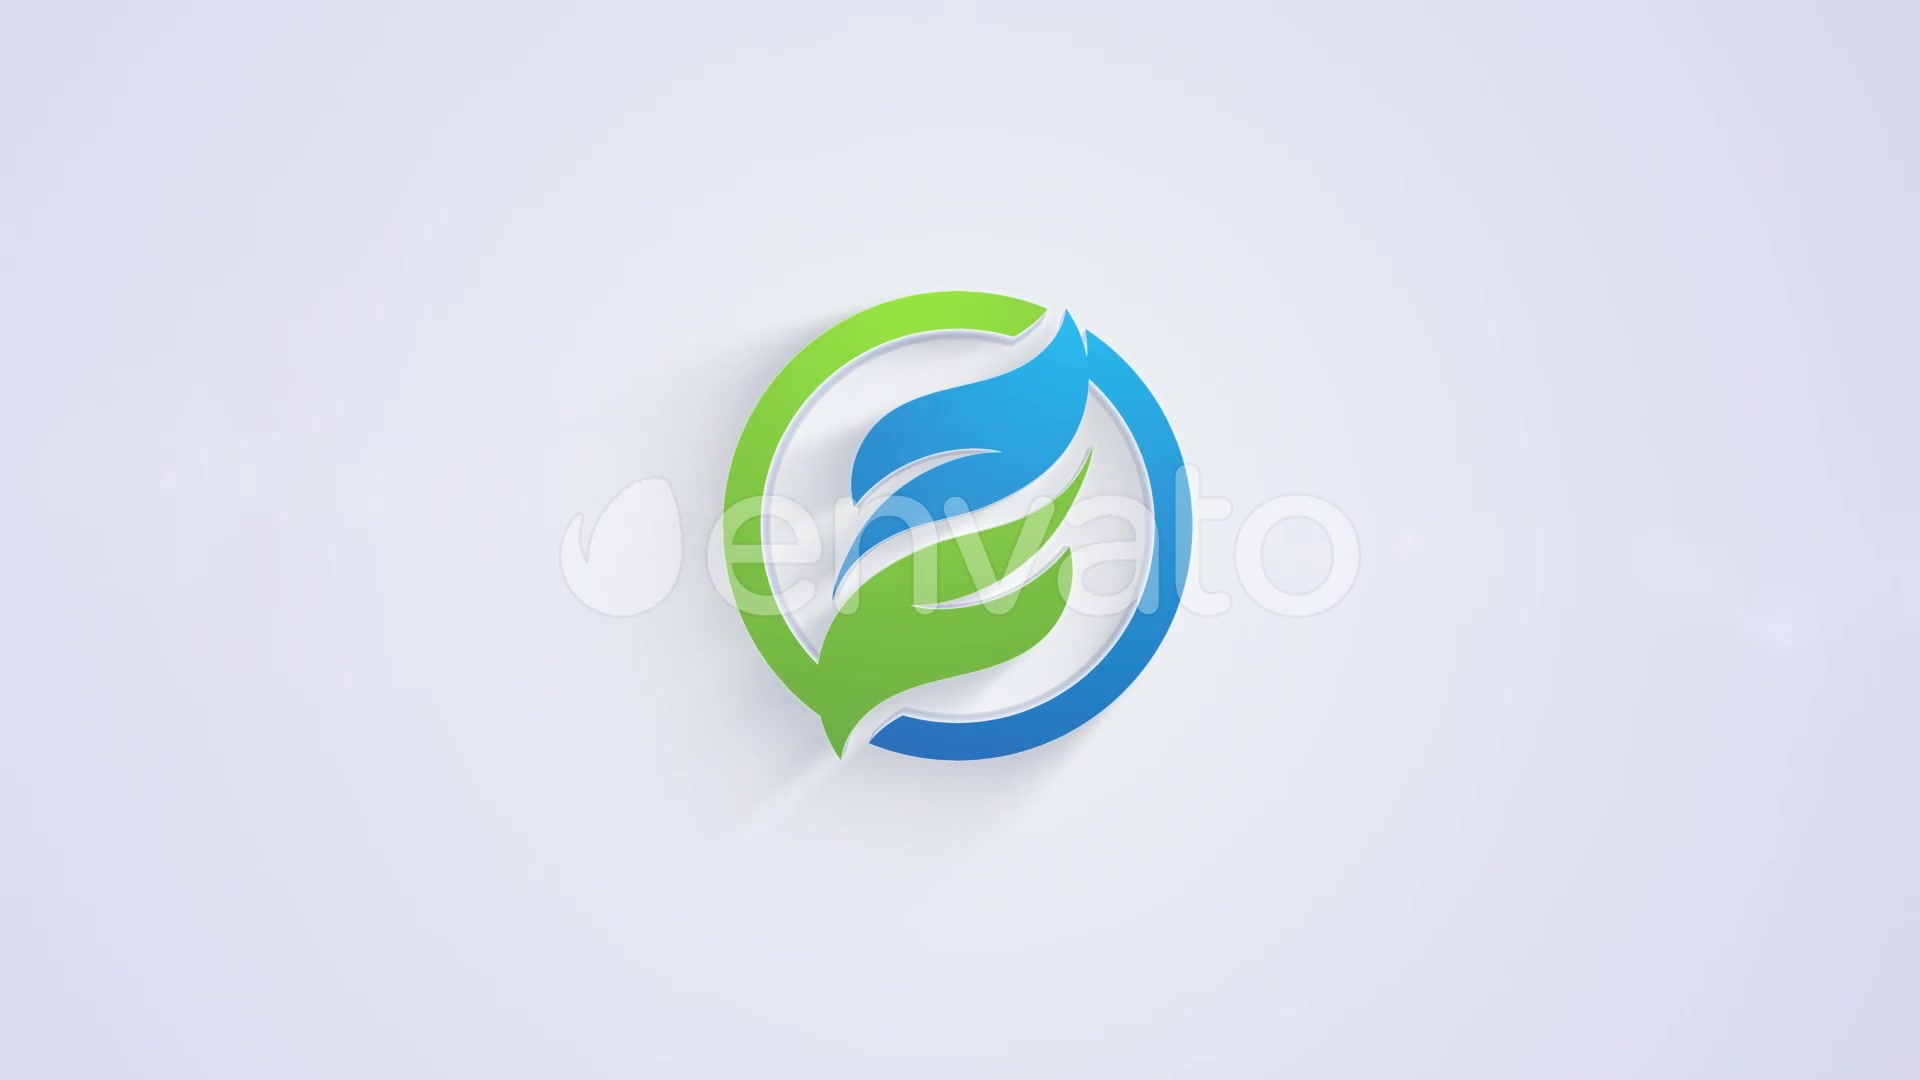 davinci resolve logo reveal motion graphic template